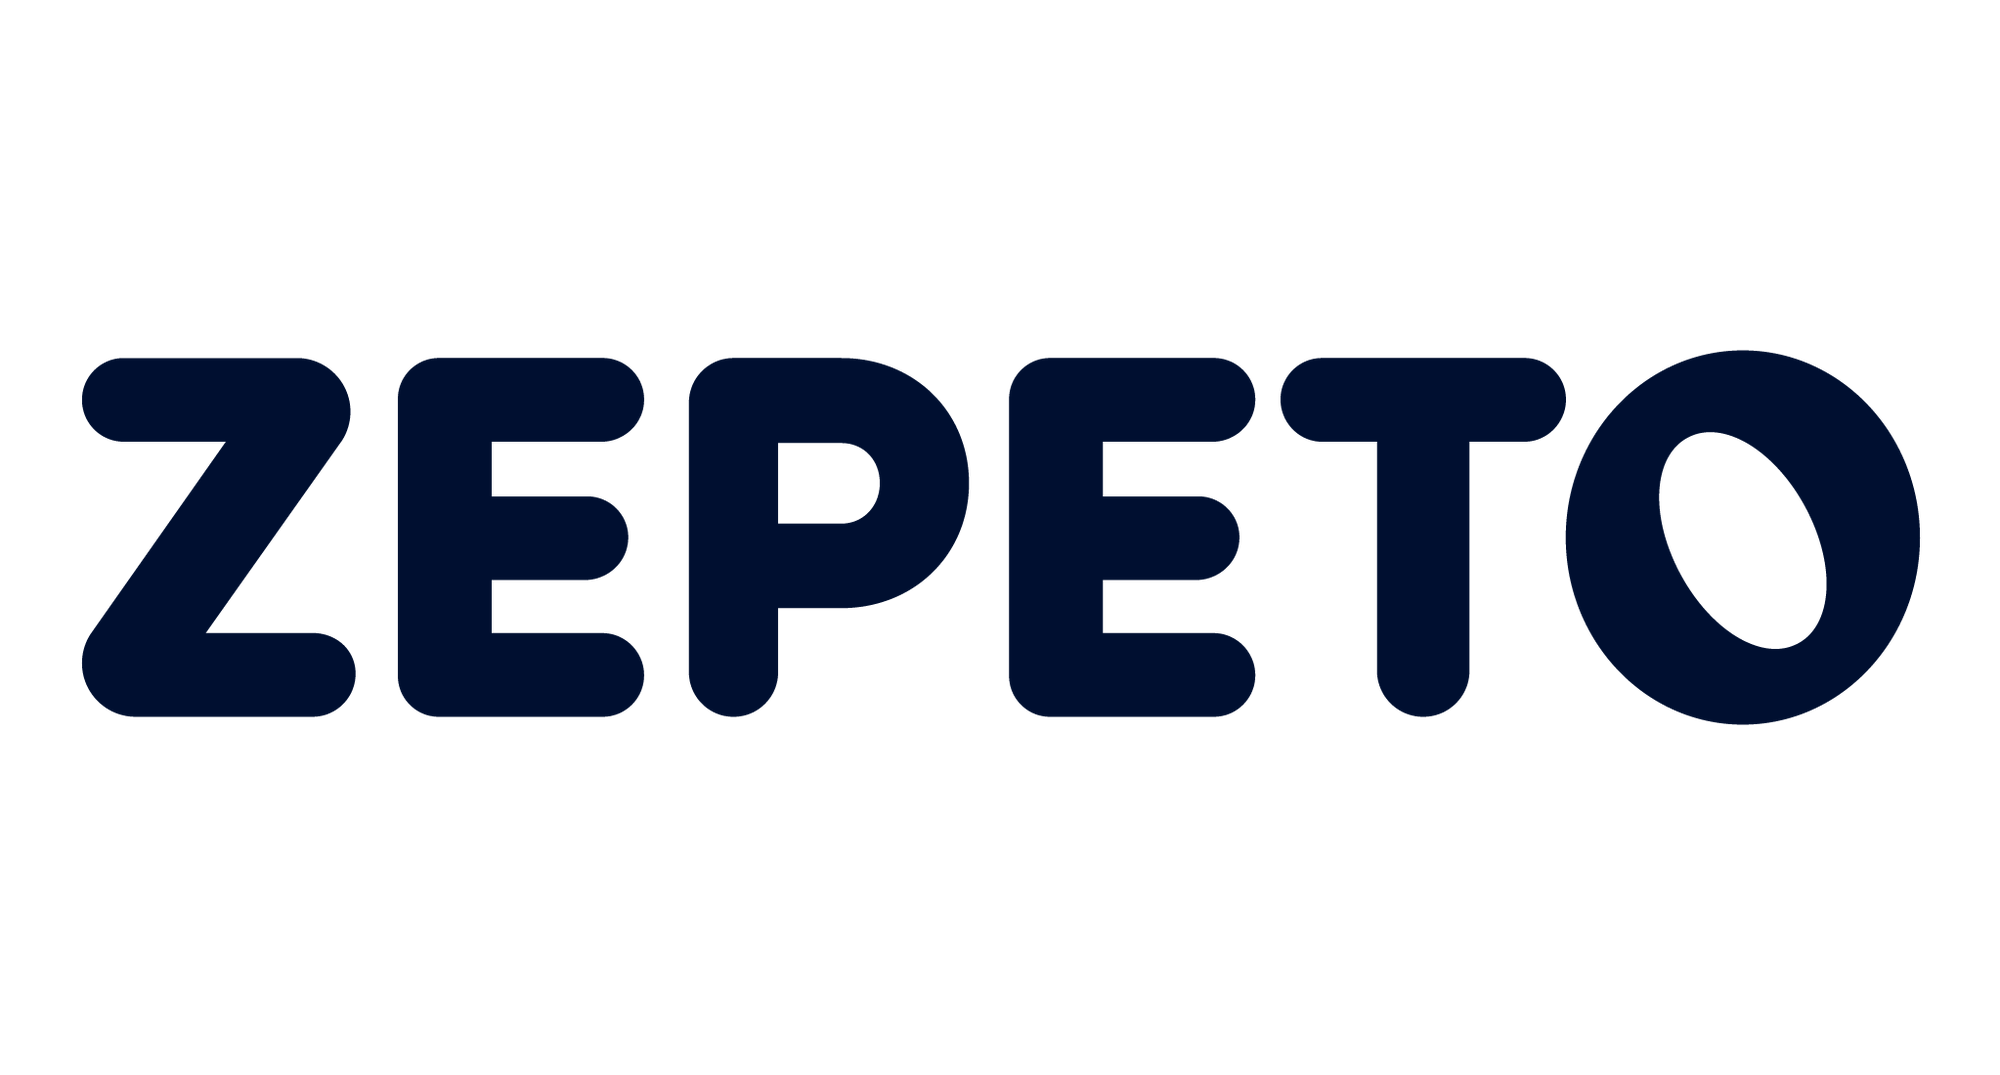 ZEPETO メタバースプラットフォーム